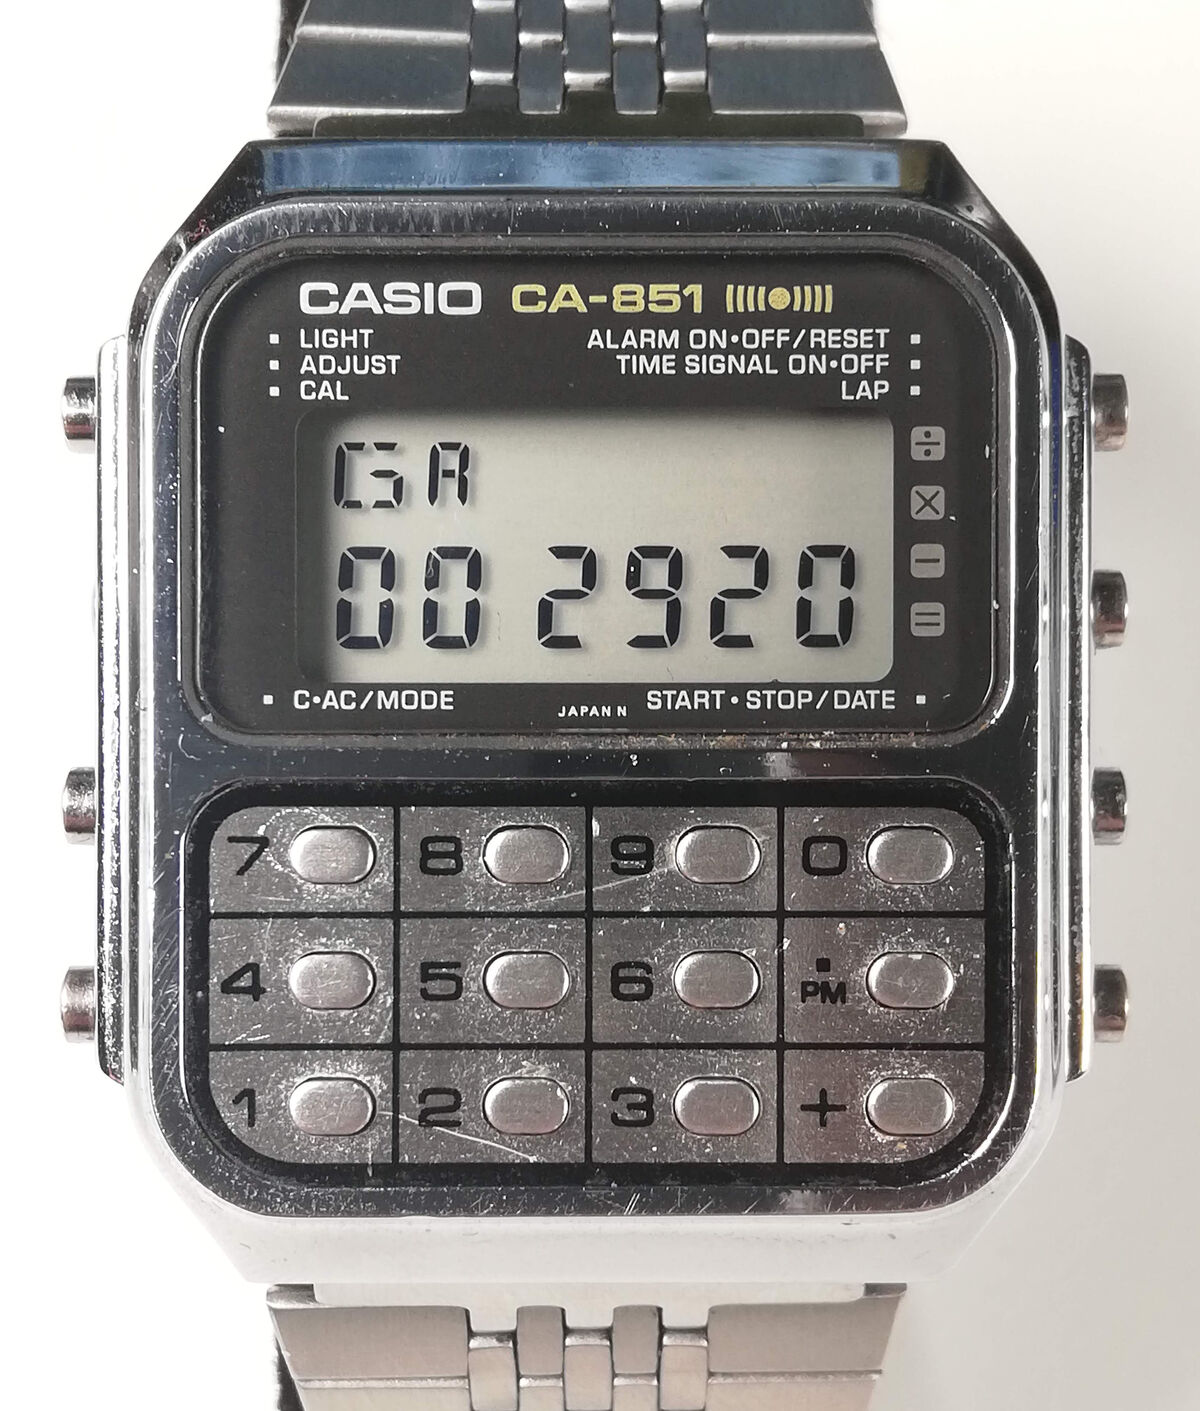 Casio CA-851 | DigitalWatch Wiki | Fandom